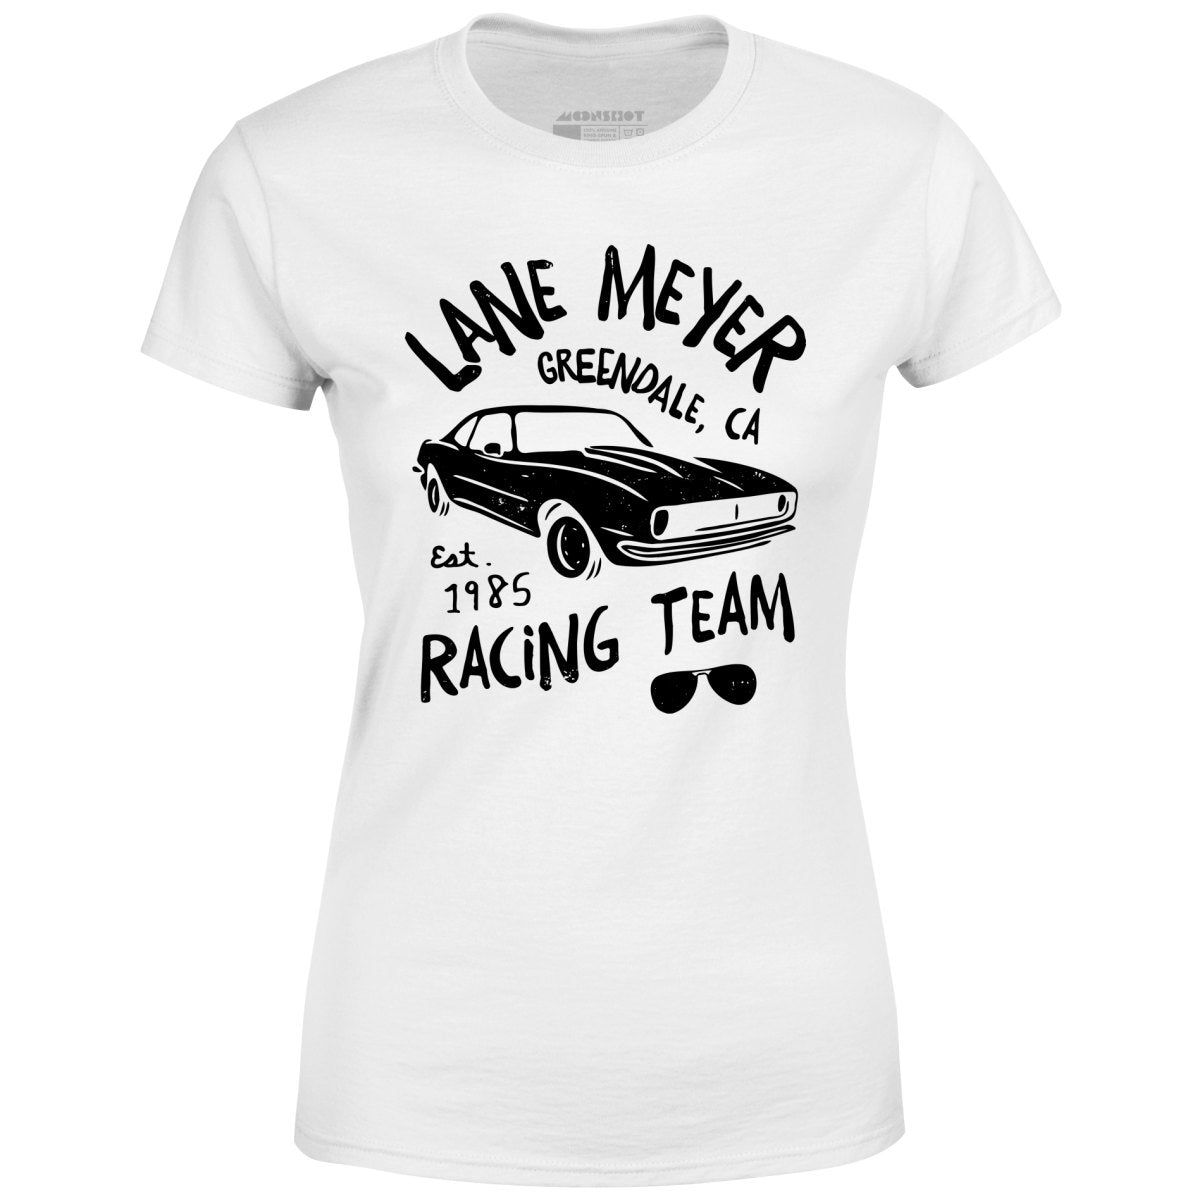 Lane Meyer Racing Team - Women's T-Shirt